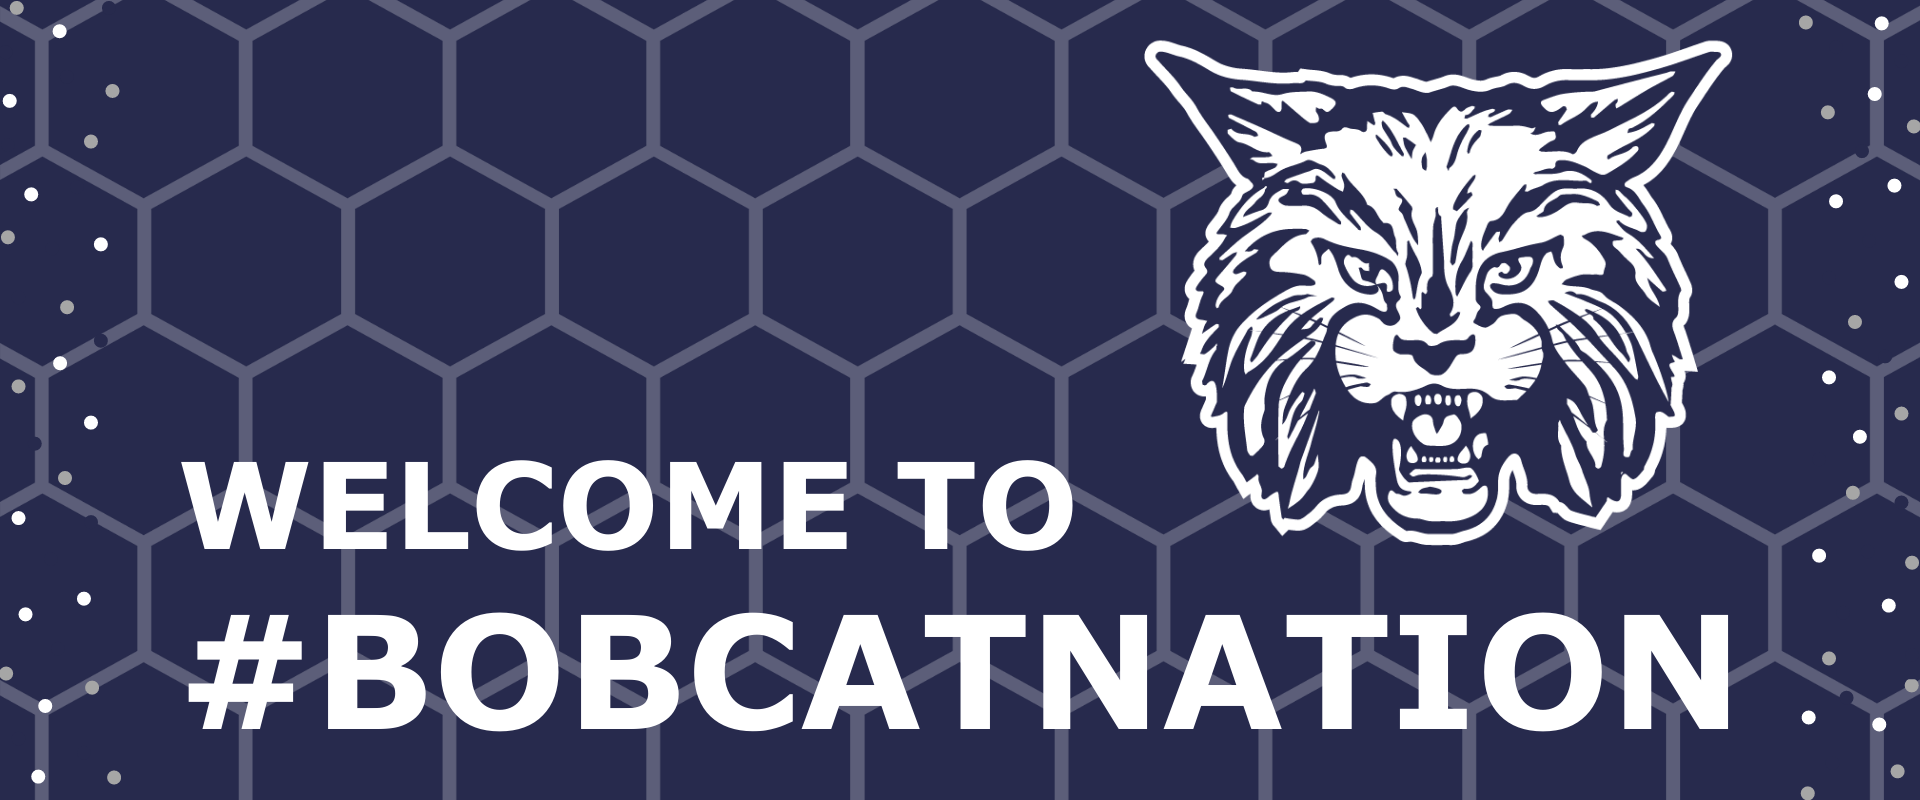 Bobcat Nation